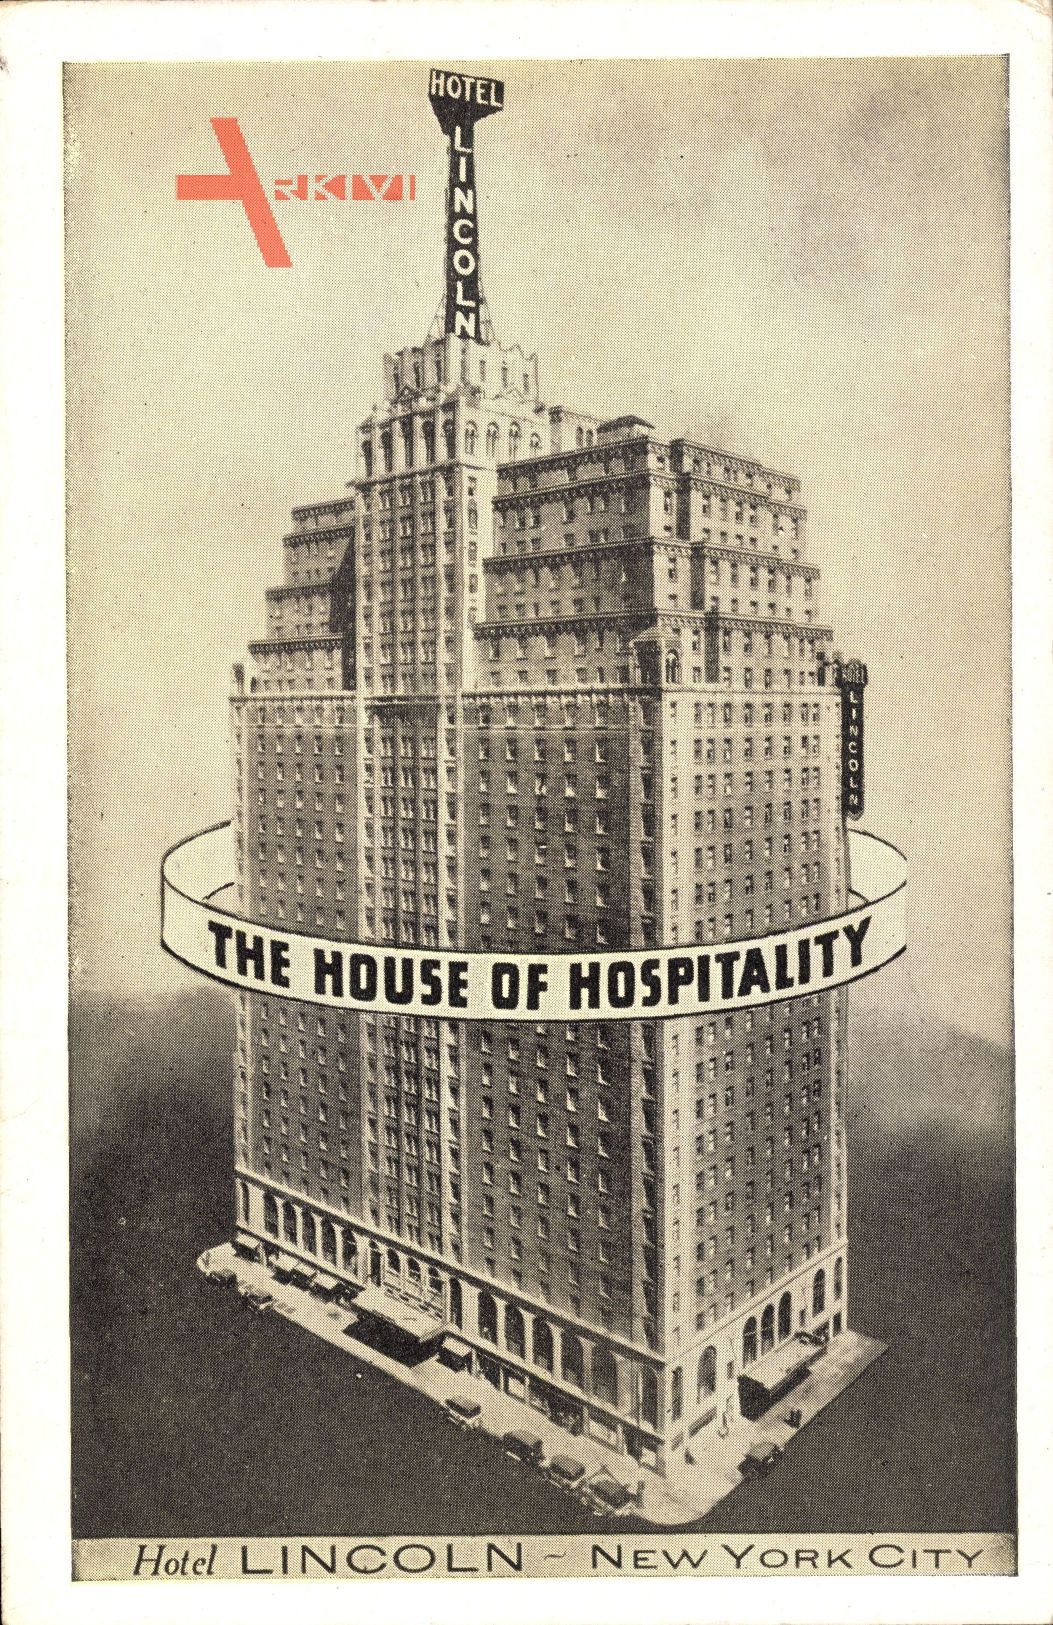 New York City USA, Hotel Lincoln, The House of Hospitality, Maria Kramer